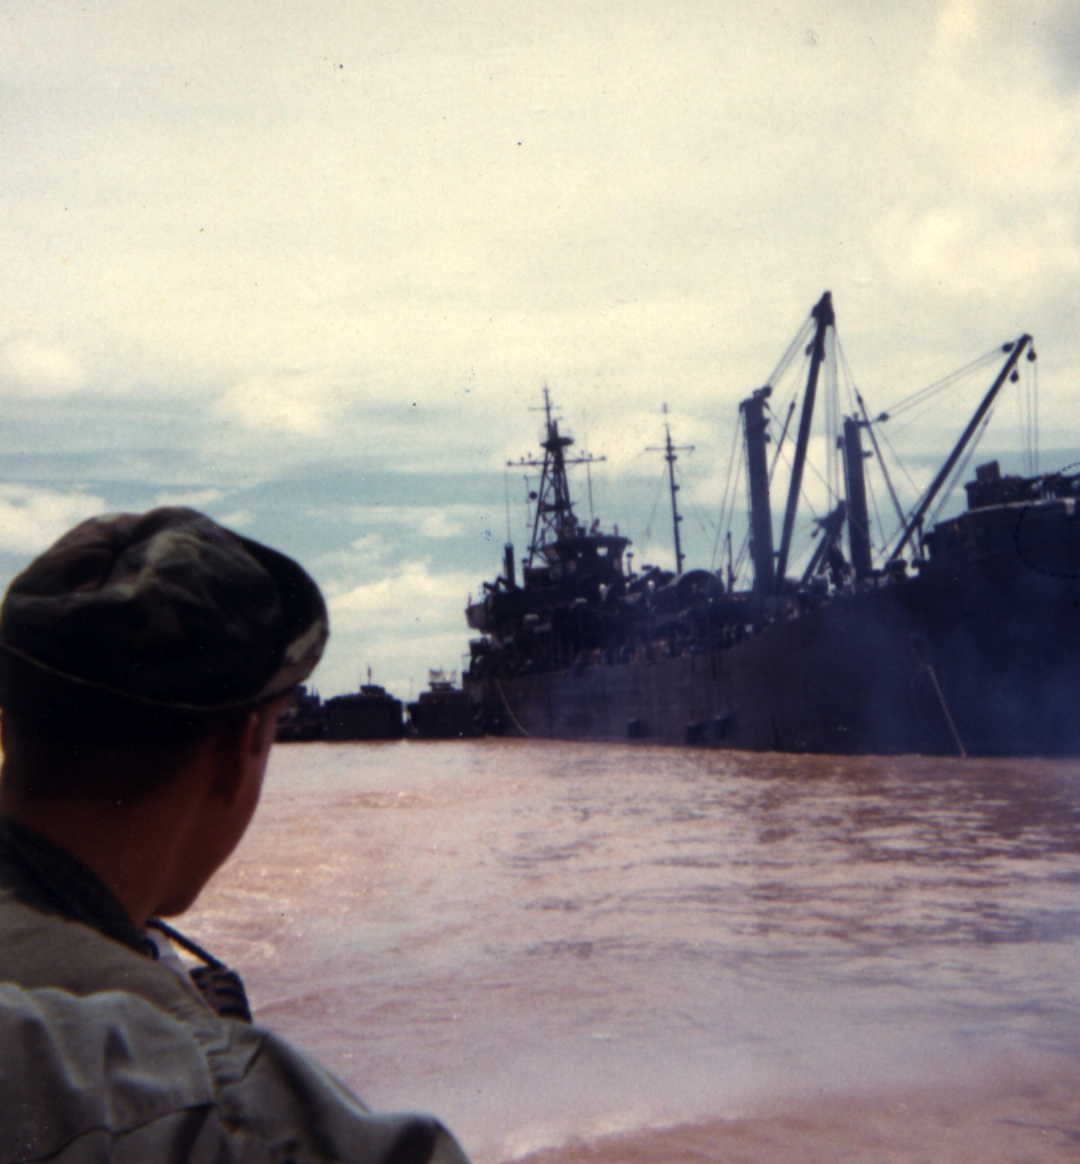 USS SATYR on the Mekong River